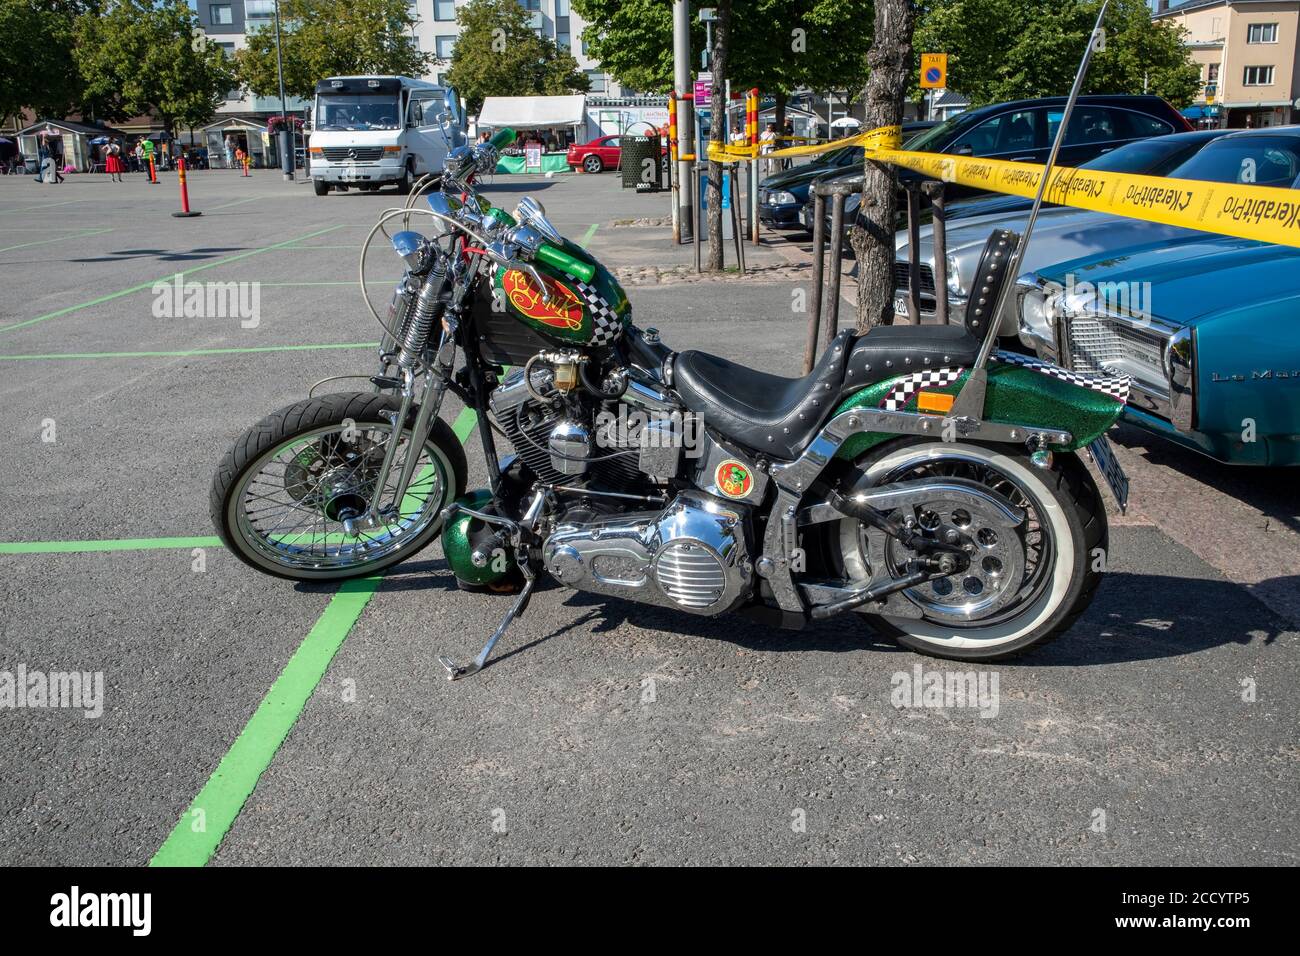 shiny green motorcycle on display, Lappeenranta Finland Stock Photo